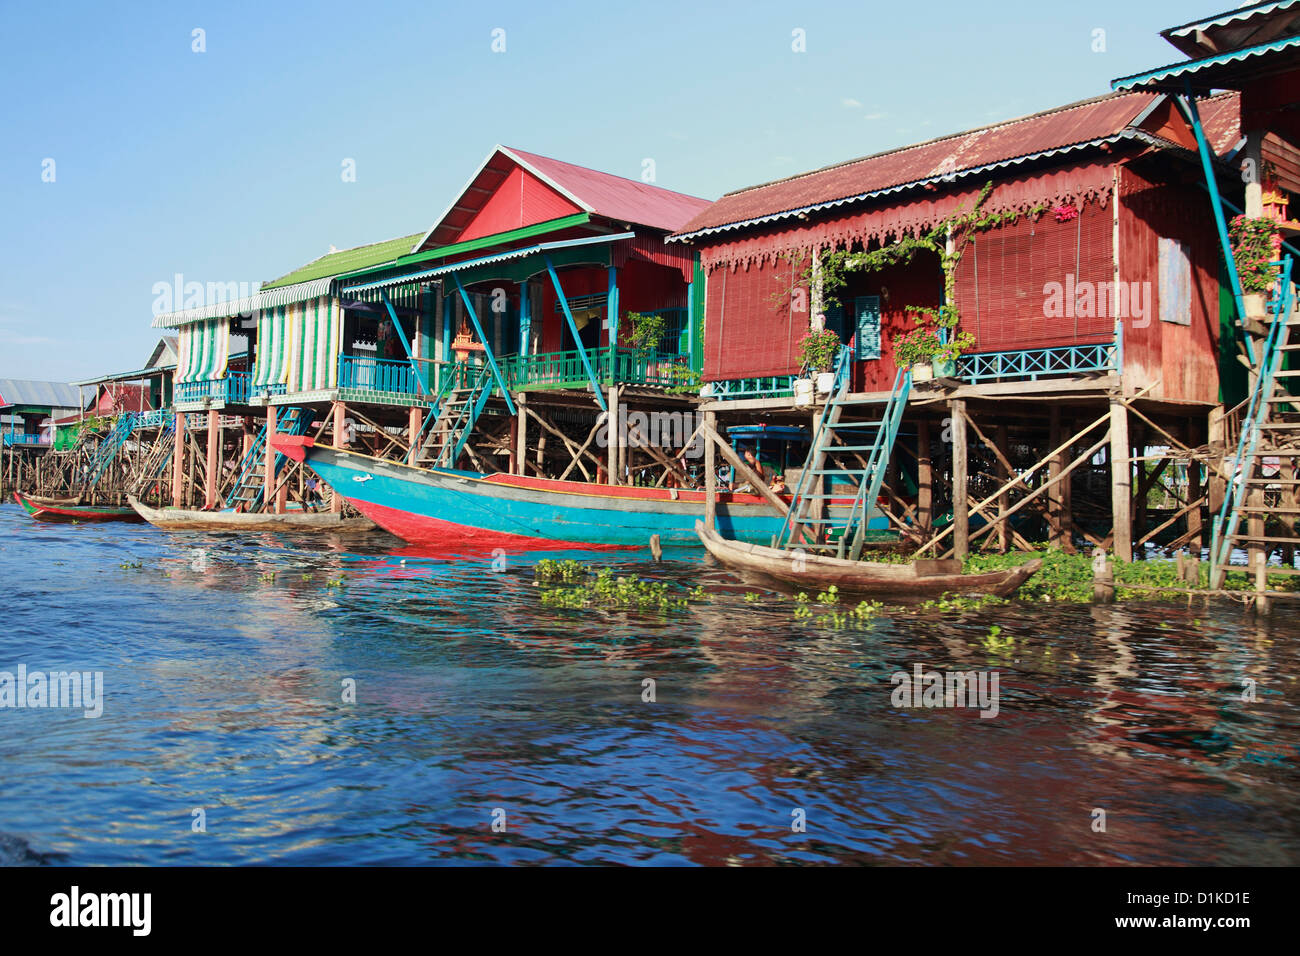 Stilt houses on a river, Siem Reap, Cambodia Stock Photo